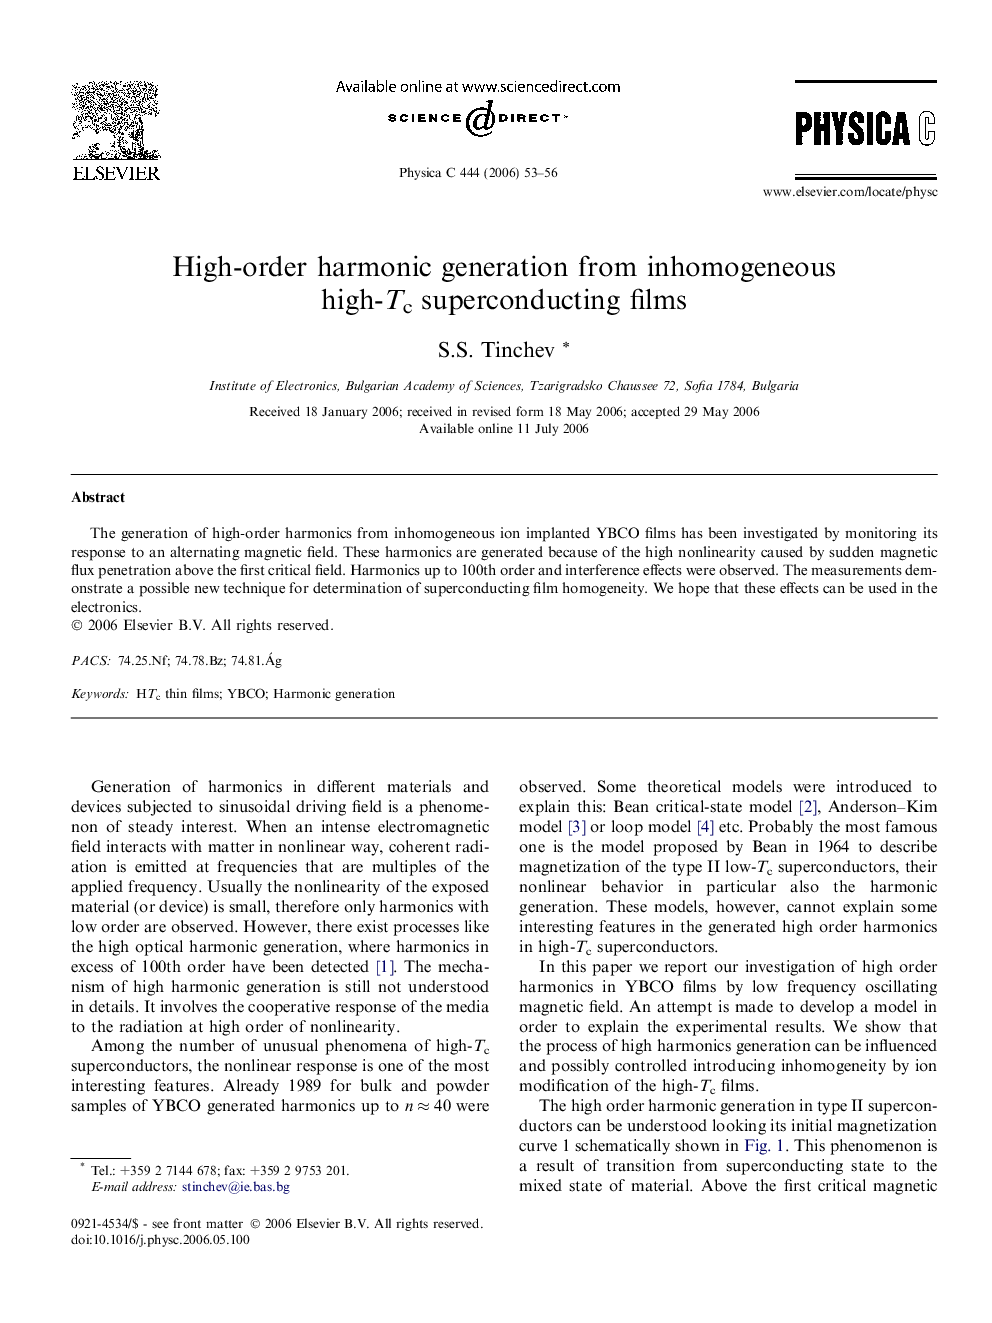 High-order harmonic generation from inhomogeneous high-Tc superconducting films